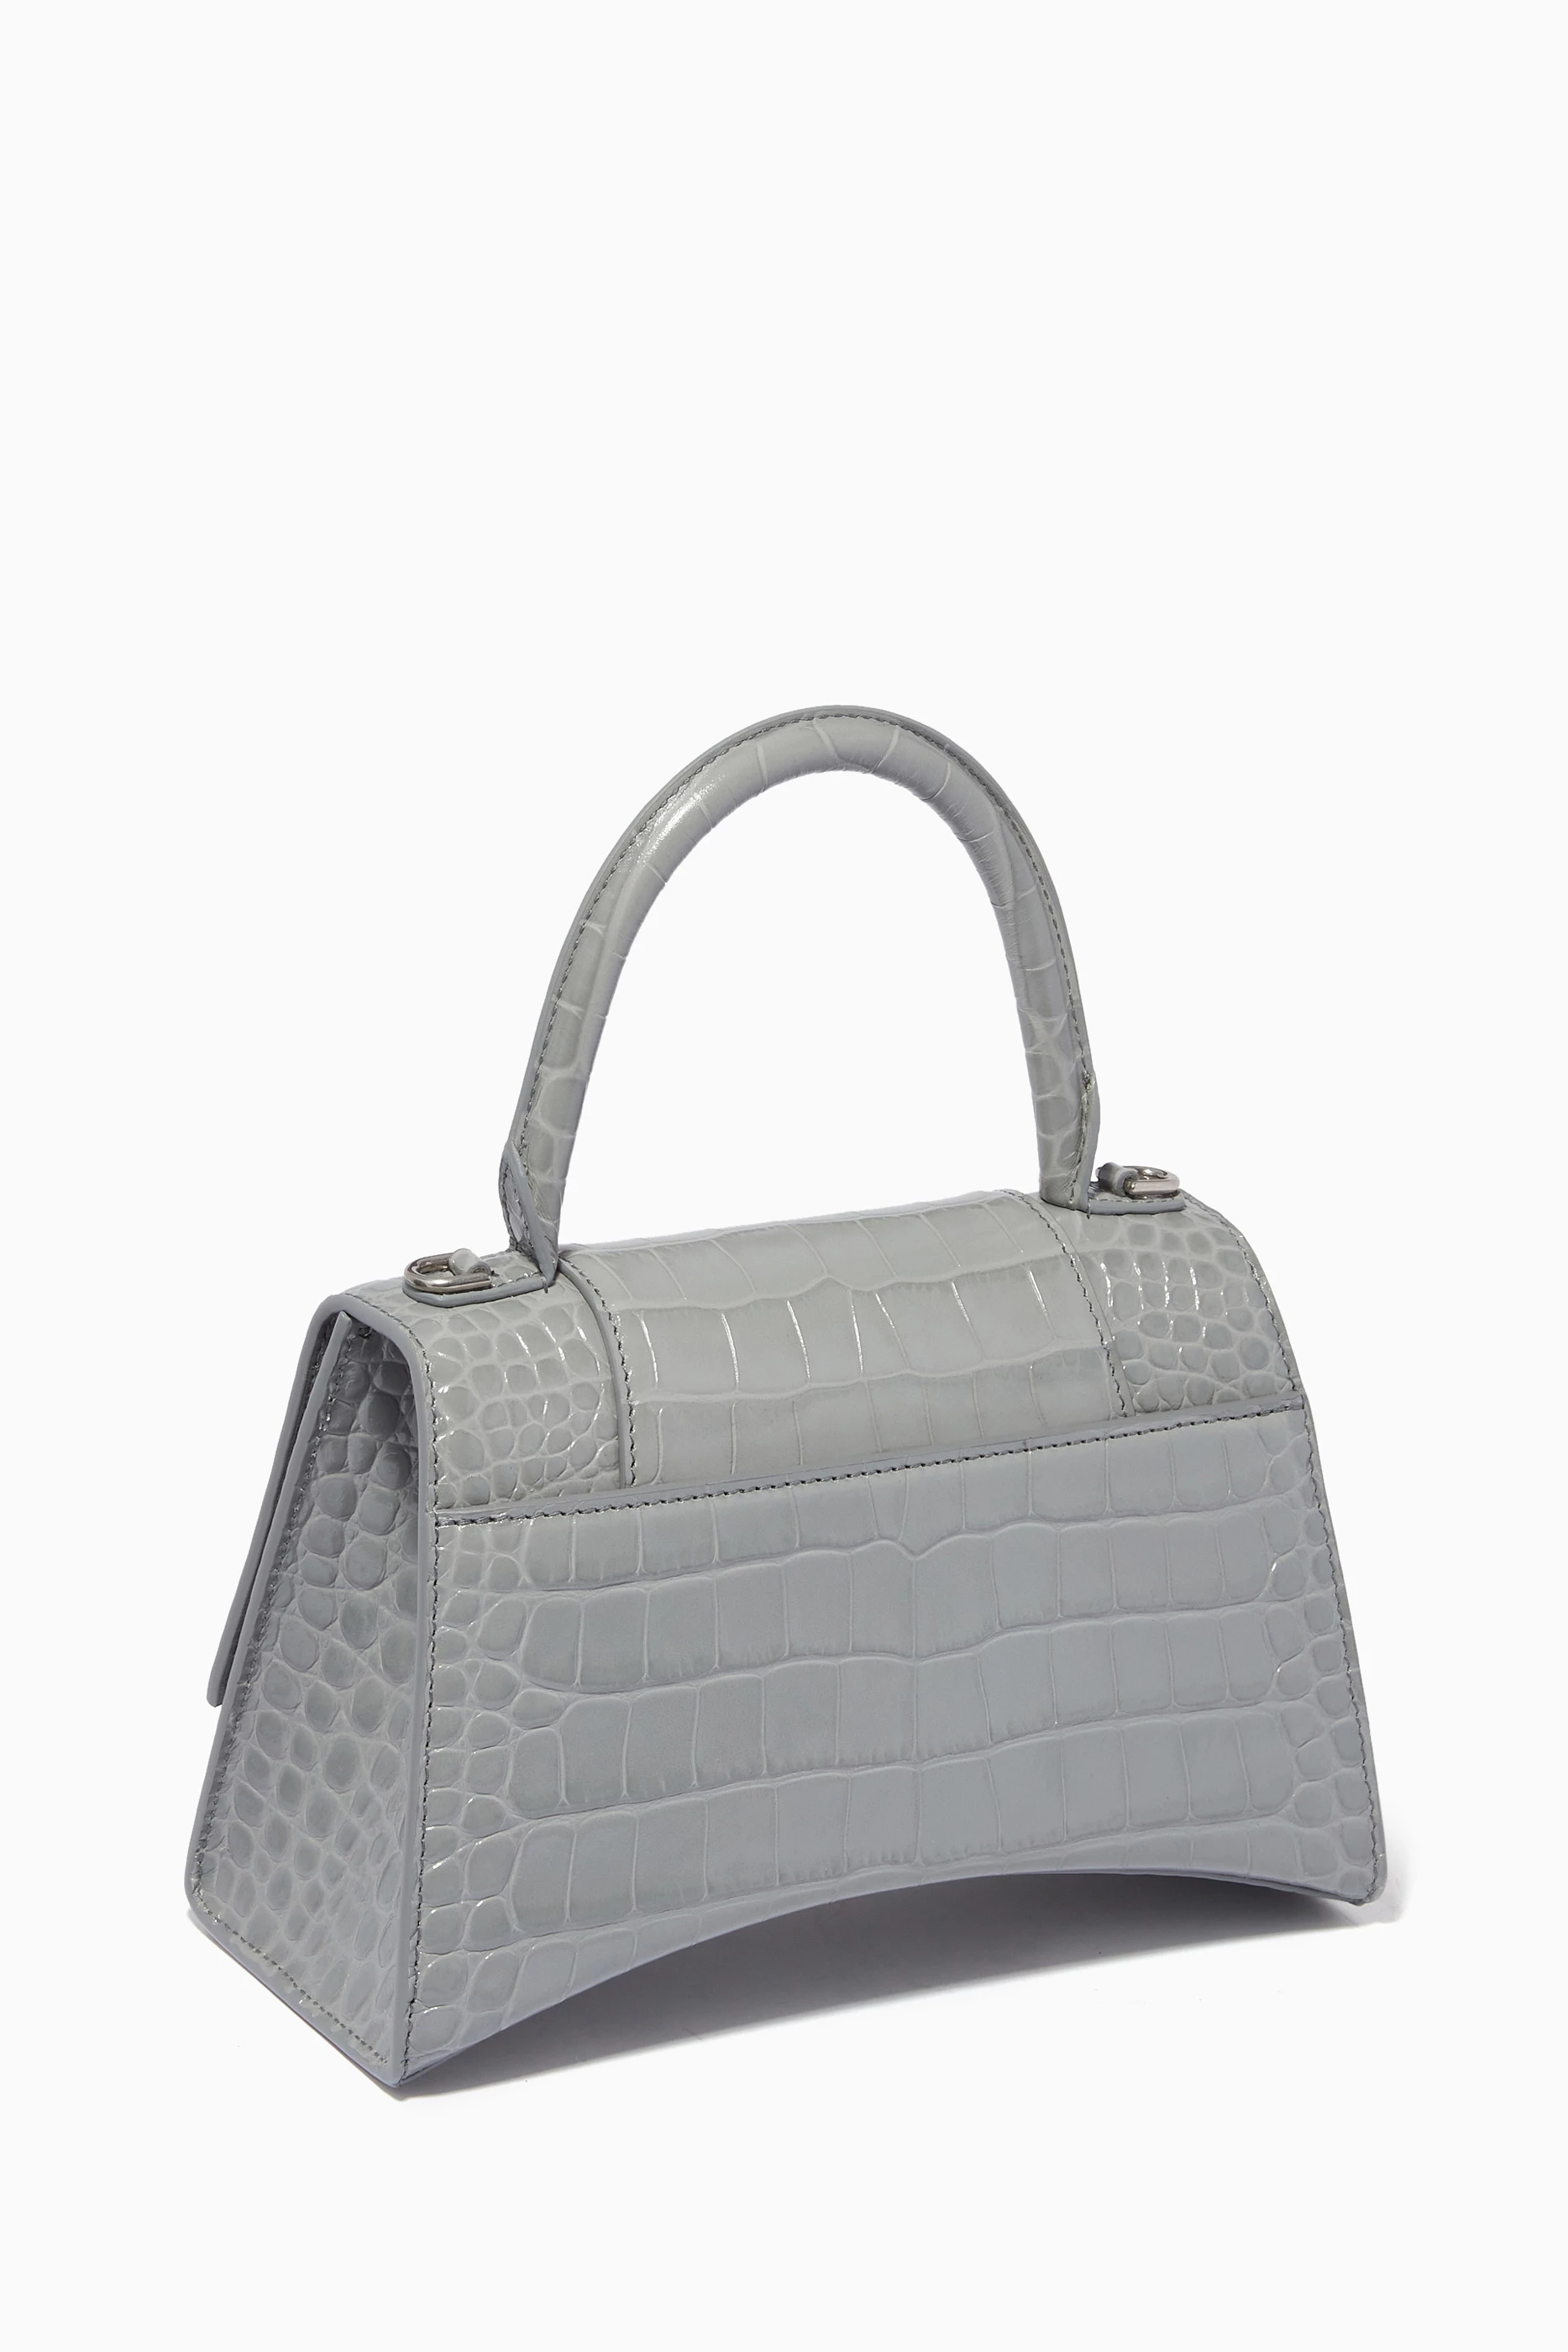 Balenciaga Hourglass Top Handle Bag Small Crocodile Embossed Grey